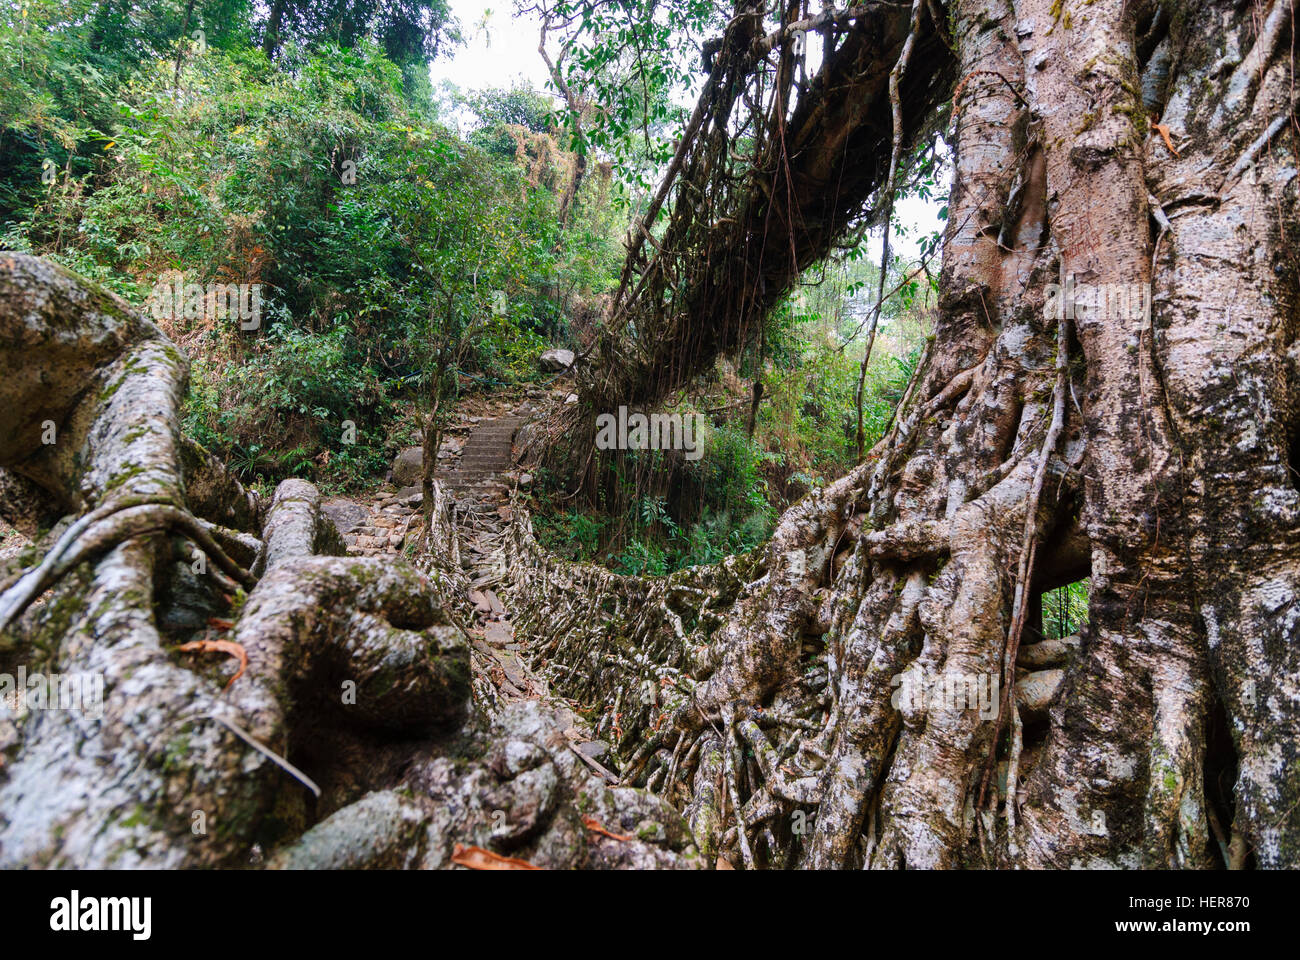 Cherrapunjee: root bridge de raíces del árbol del caucho (Ficus elastica) sobre un arroyo, Meghalaya, India Foto de stock